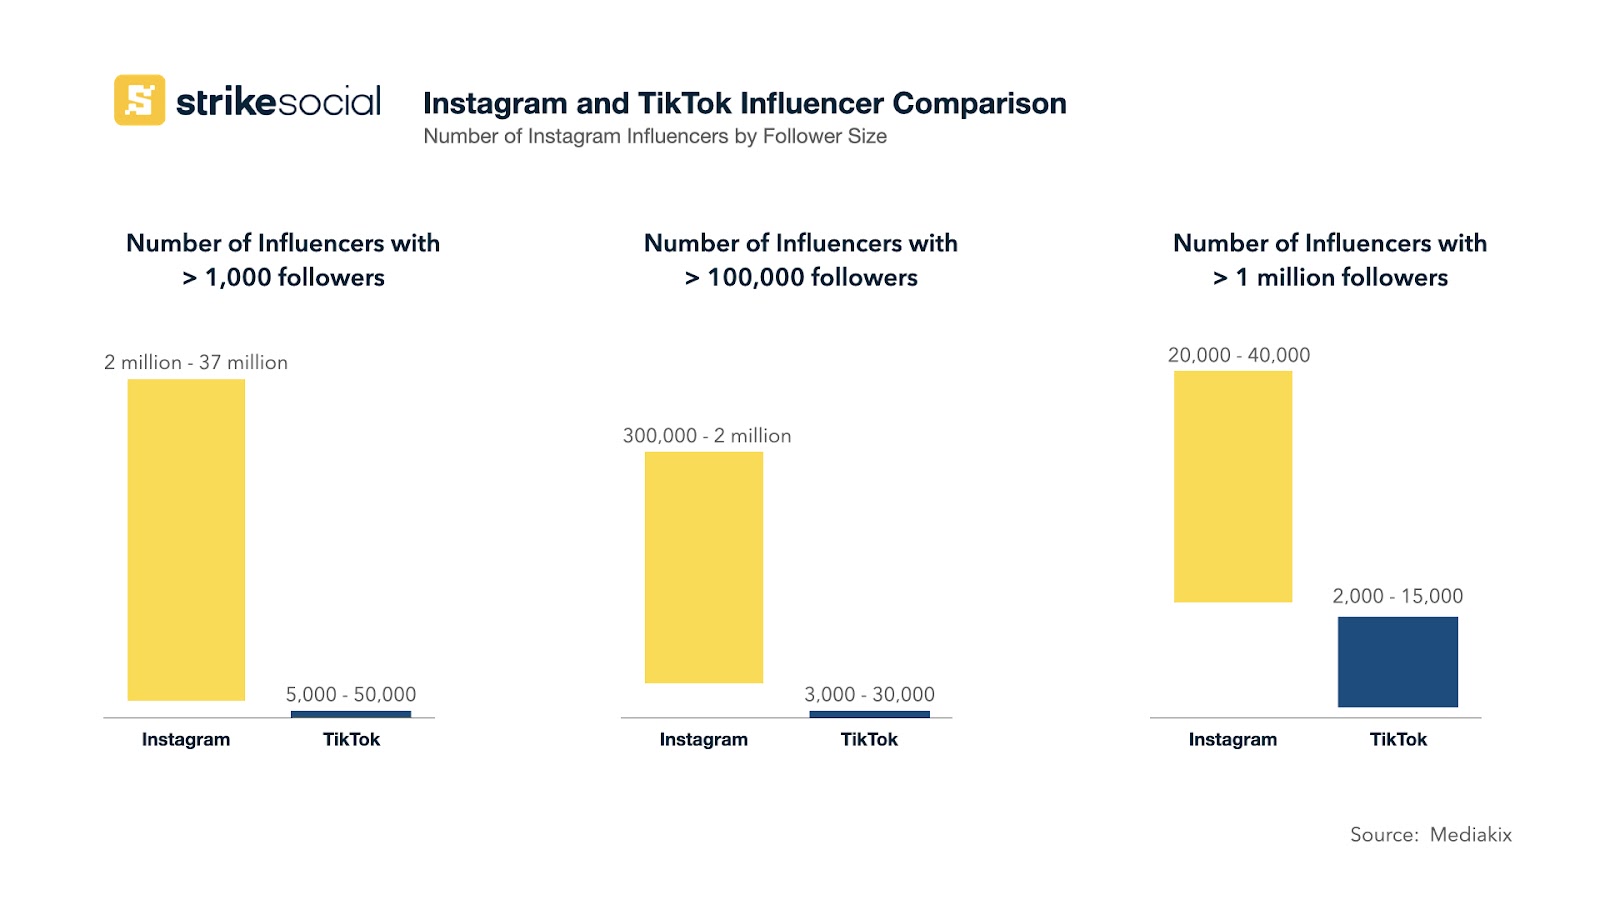 Instagram vs. TikTok Influencer Size Comparison Strike Social